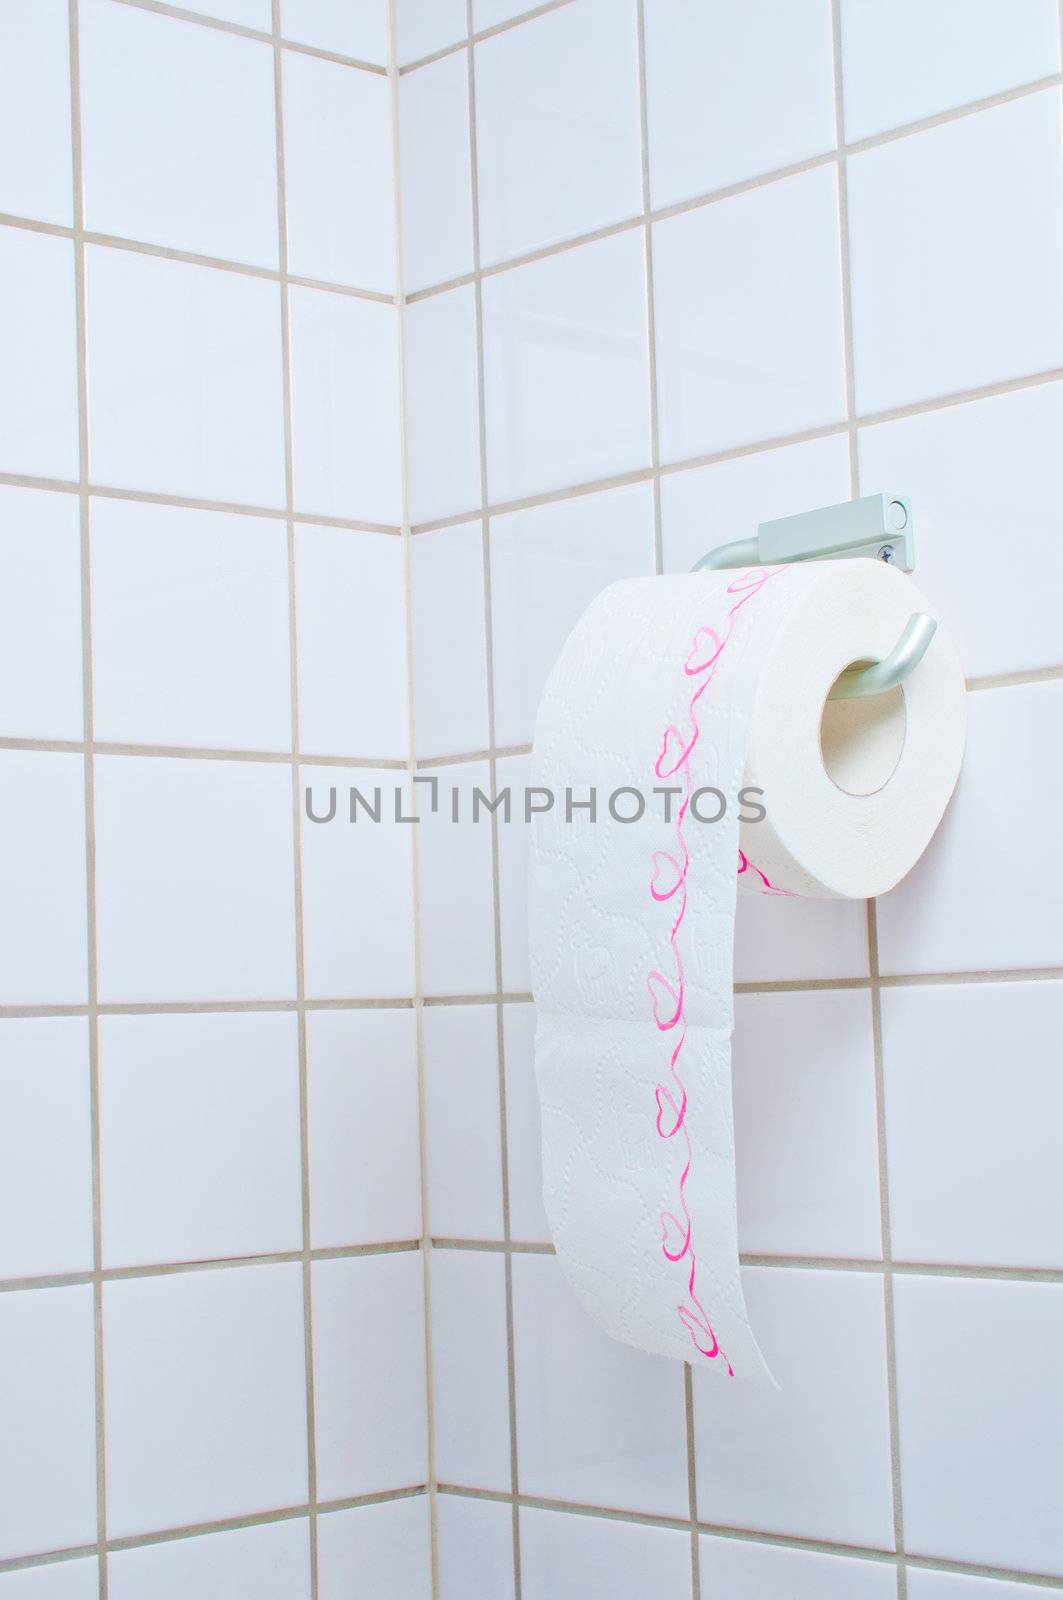 Toilet paper on a holder by Nanisimova